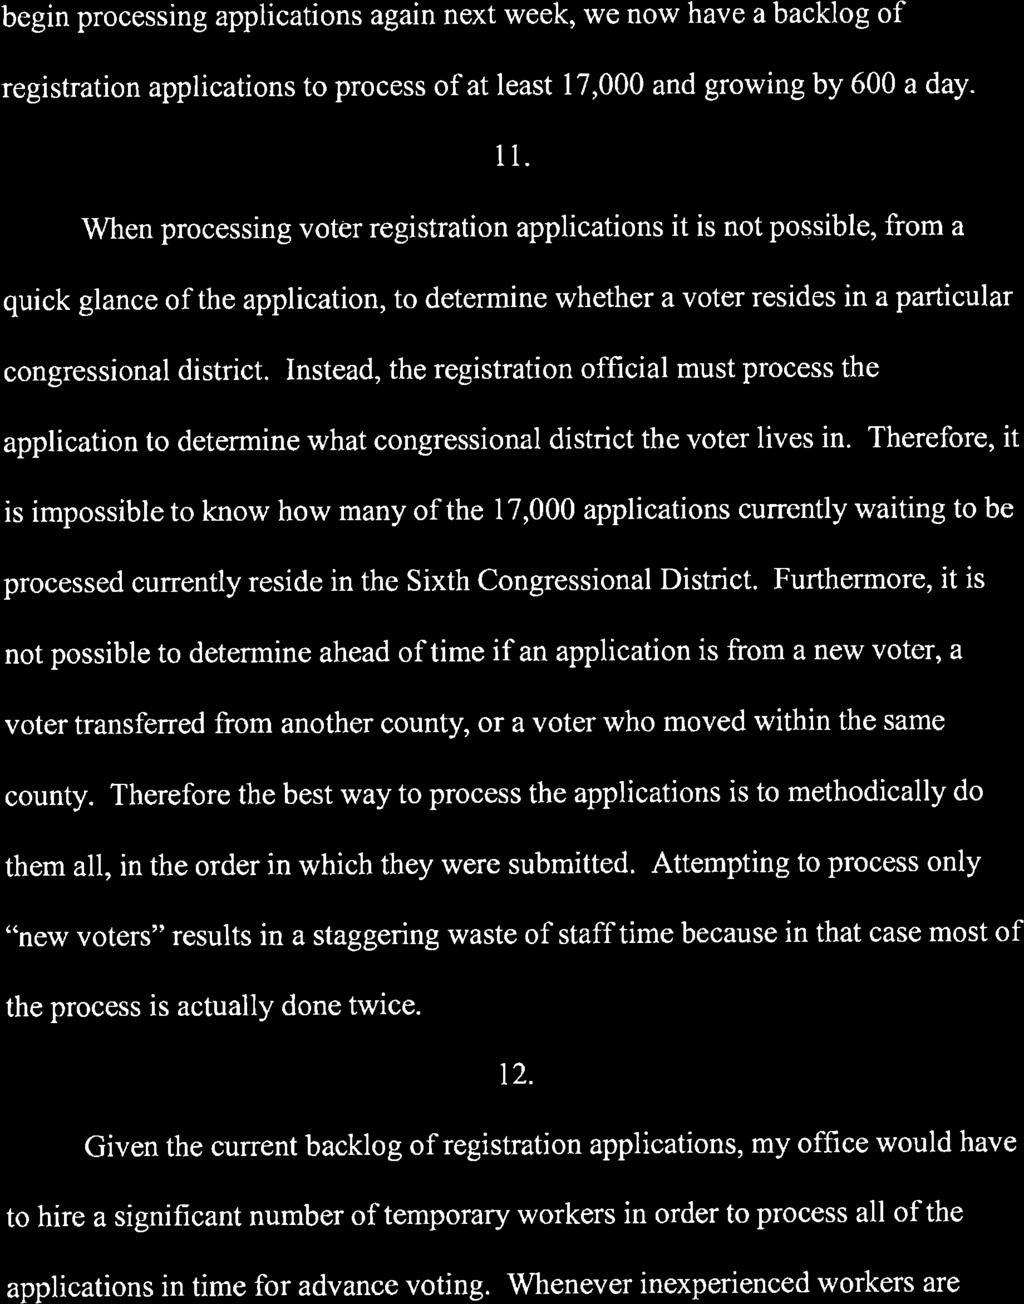 Case 1:17-cv-01397-TCB Document